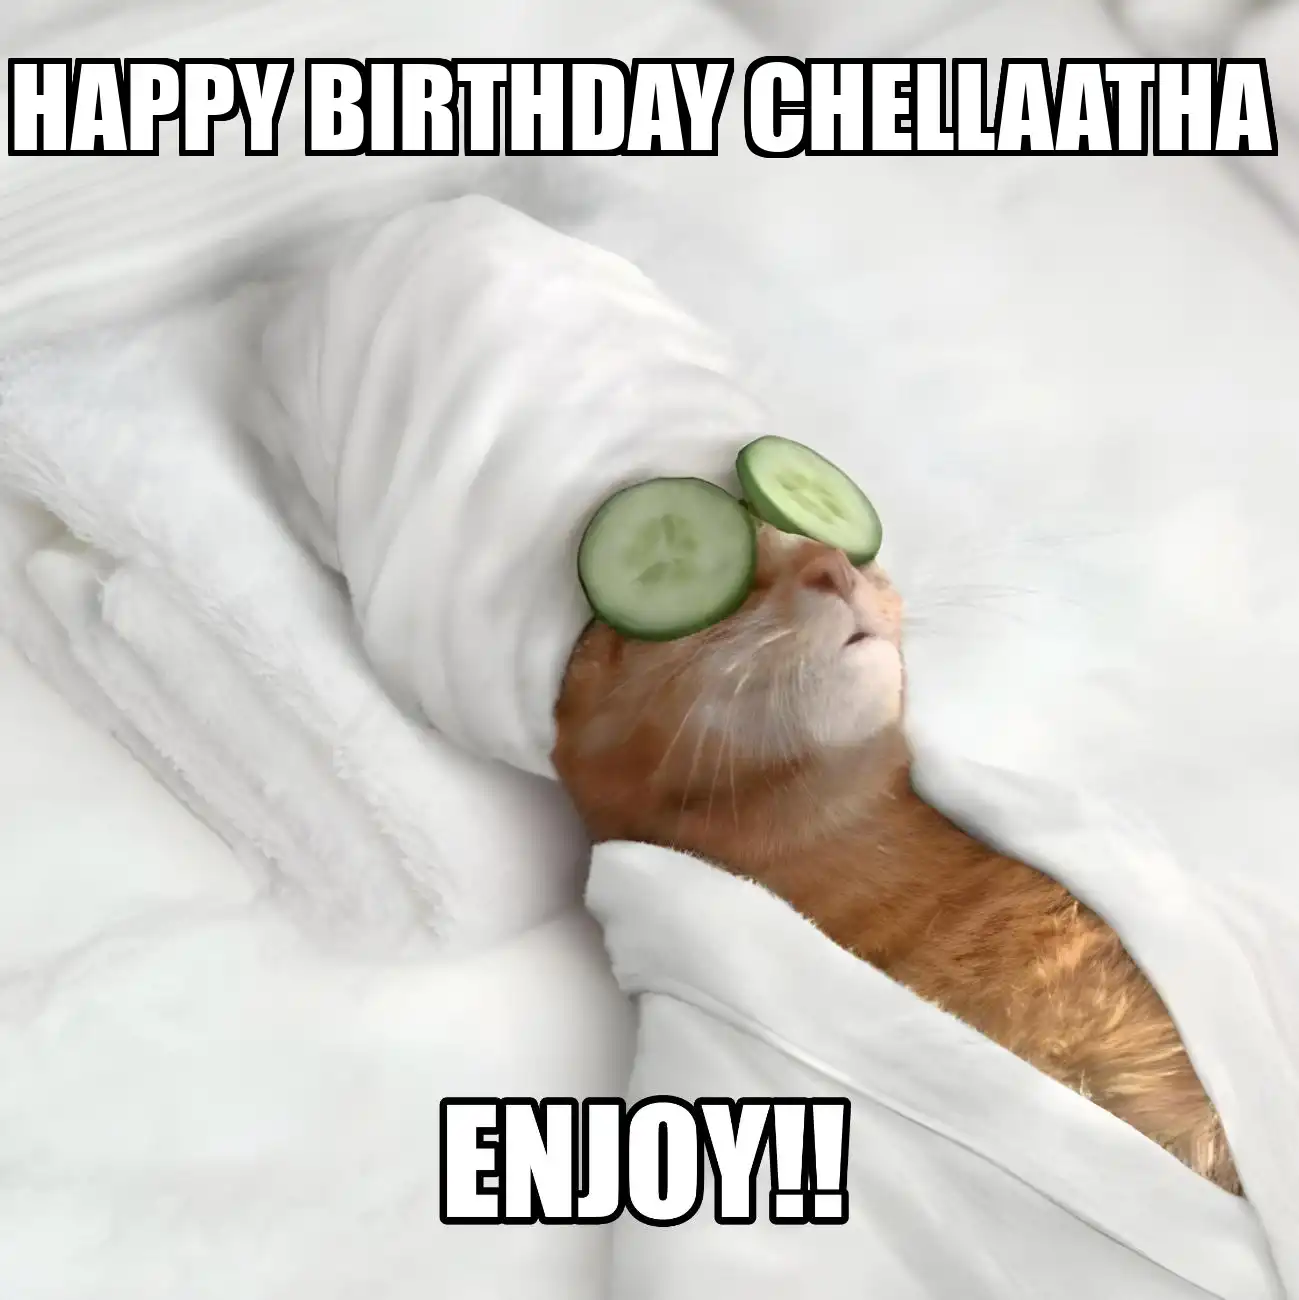 Happy Birthday Chellaatha Enjoy Cat Meme